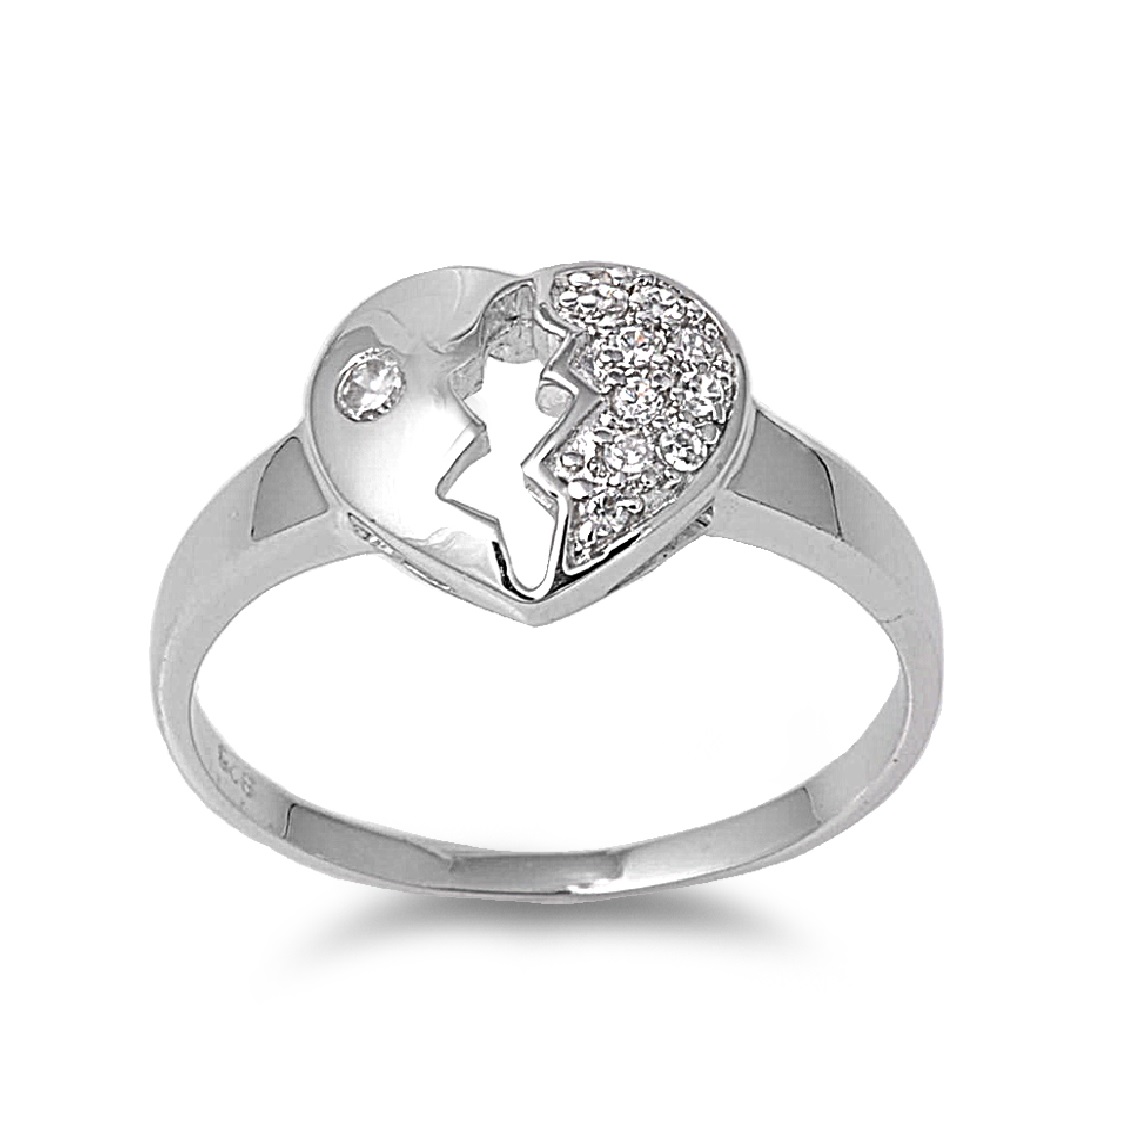 AllinStock Broken Heart Cubic Zirconia Ring Sterling Silver 925 